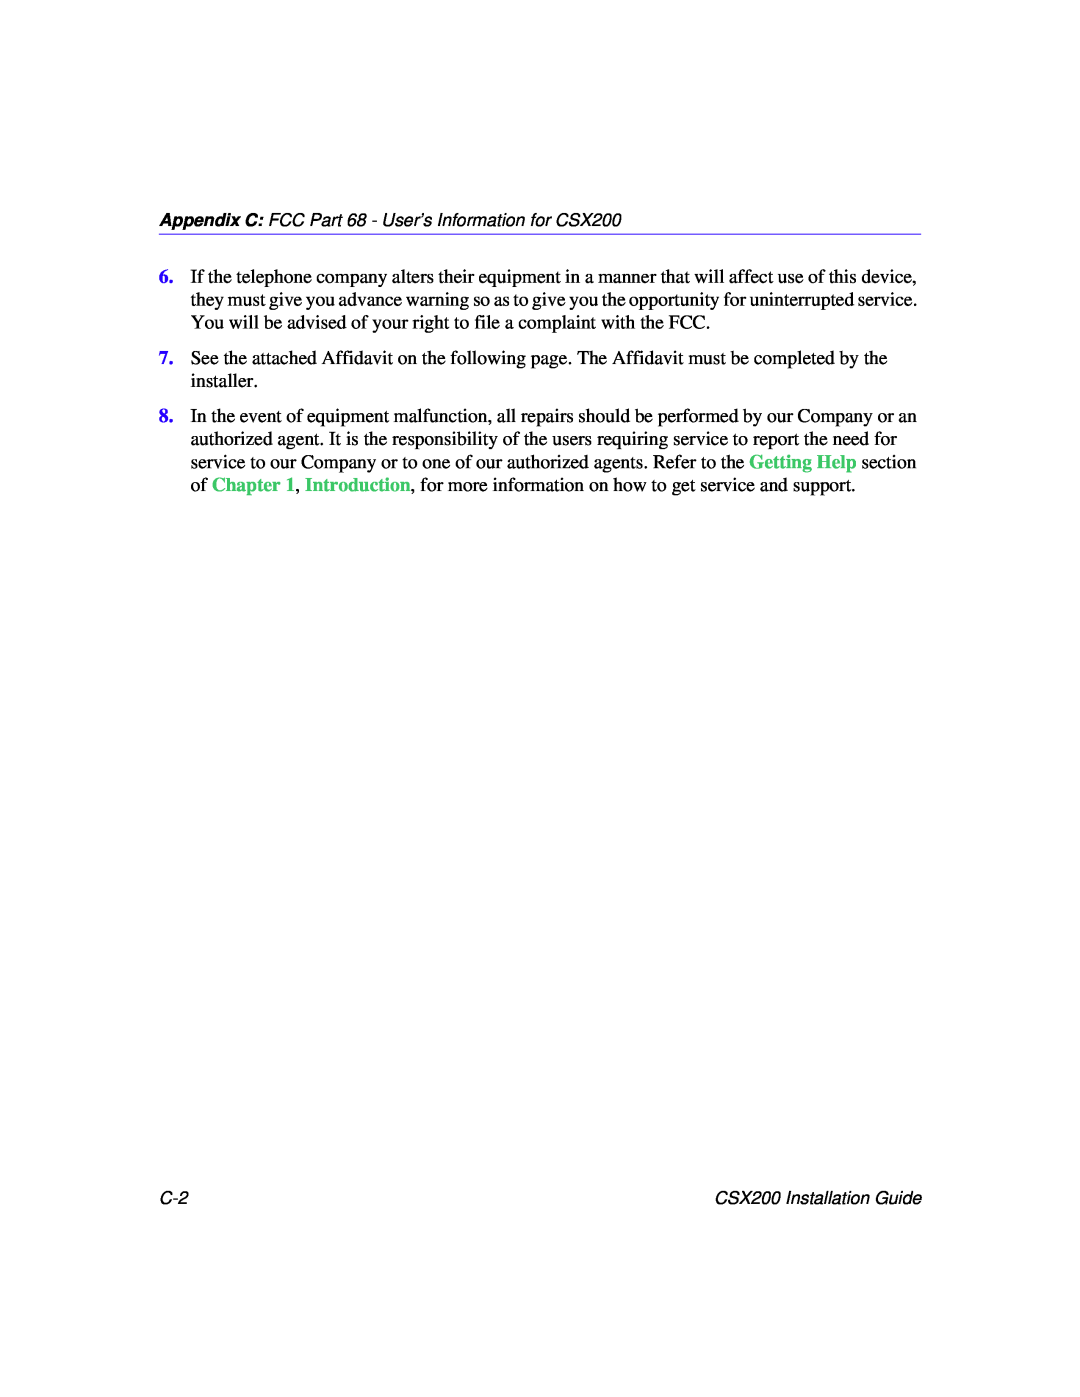 Cabletron Systems CSX200 manual 